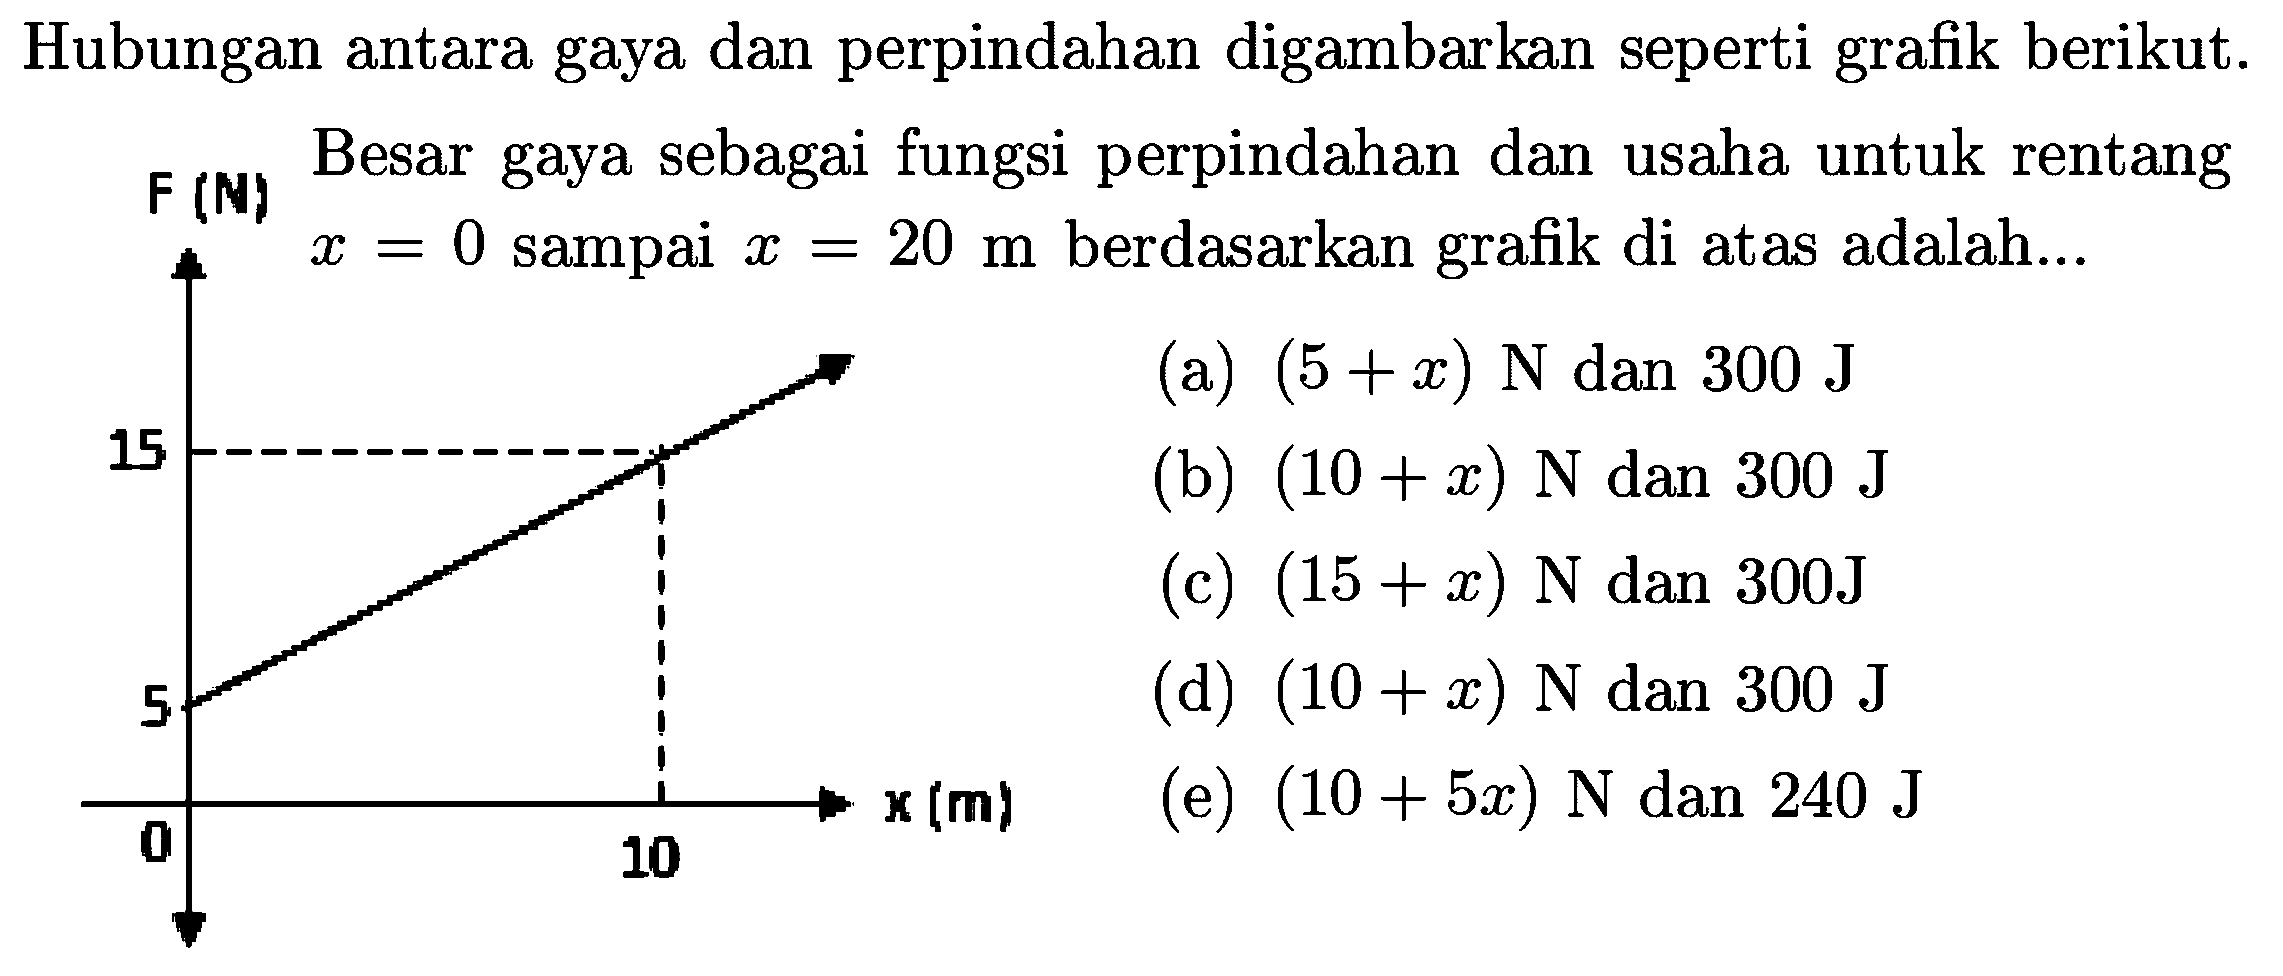 Hubungan antara gaya dan perpindahan digambarkan seperti grafik berikut.
 F({N})  Besar gaya sebagai fungsi perpindahan dan usaha untuk rentang Fin,  x=0  sampai  x=20 m  berdasarkan grafik di atas adalah...
(a)  (5+x) N  dan  300 J
(b)  (10+x) N  dan  300 J
(c)  (15+x) N  dan  300 J
(d)  (10+x) N  dan  300 J
(e)  (10+5 x) N  dan  240 J